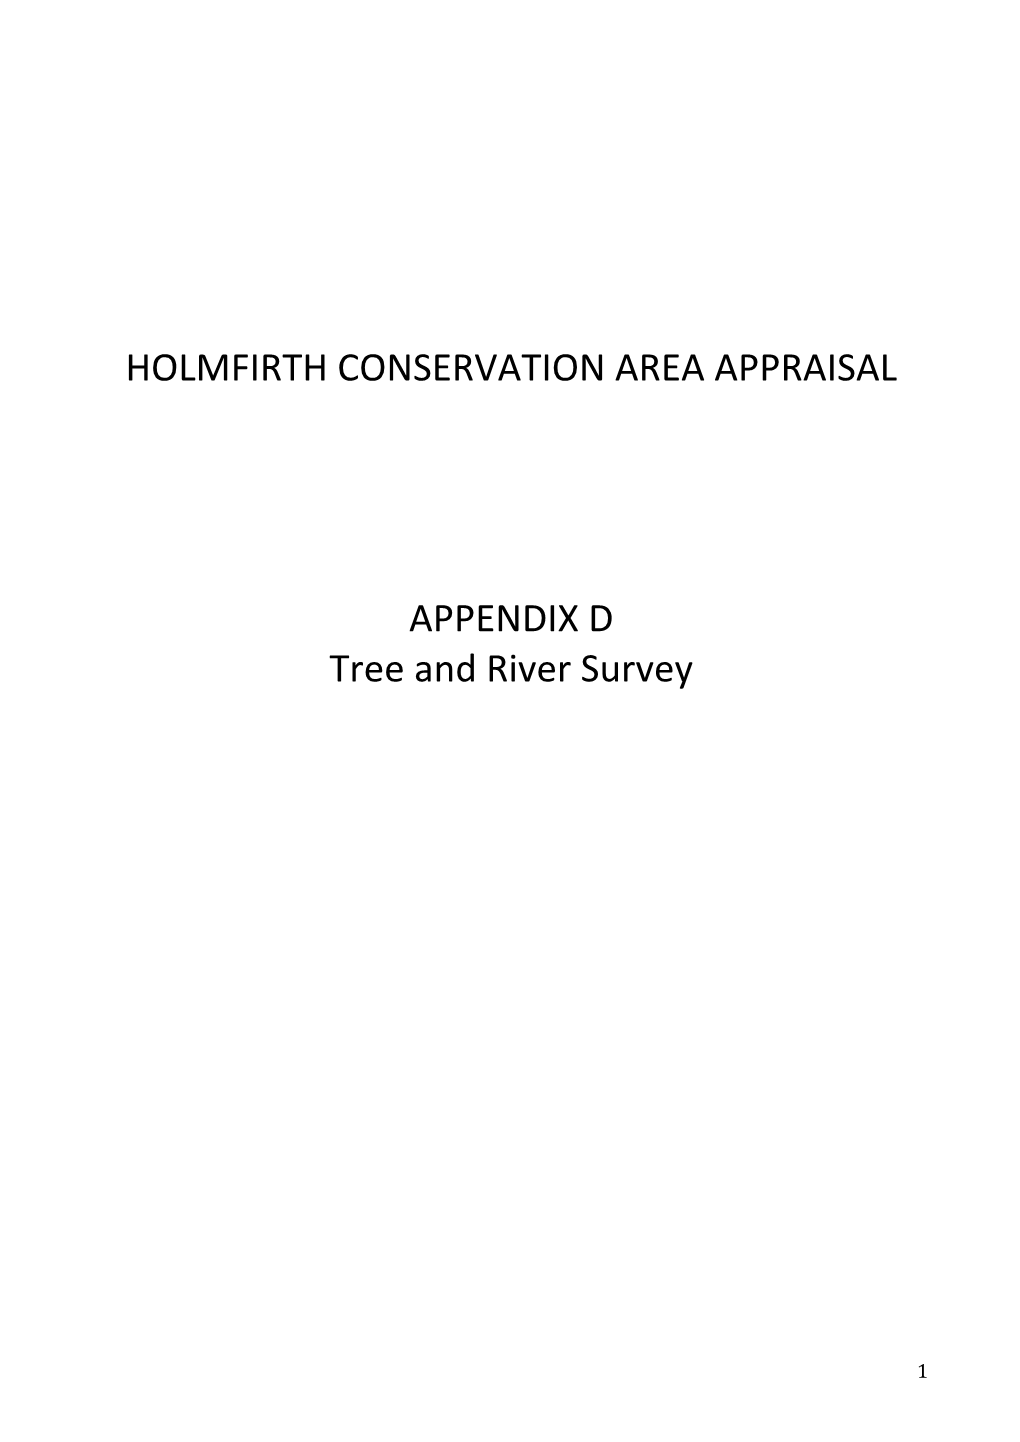 APPENDIX D Tree and River Survey